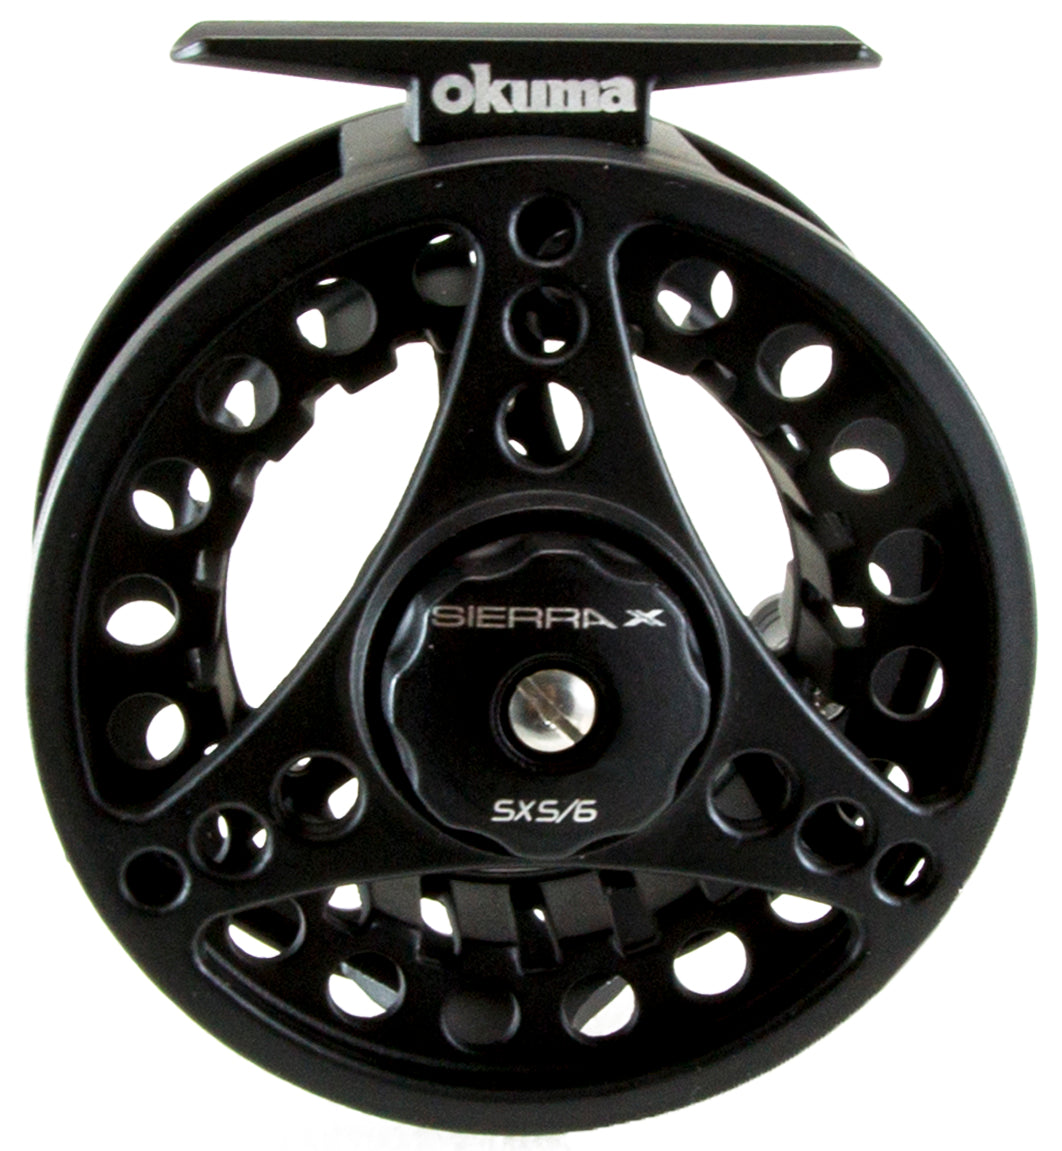 Sierra-X Fly Reels  Okuma Fishing Tackle Corp